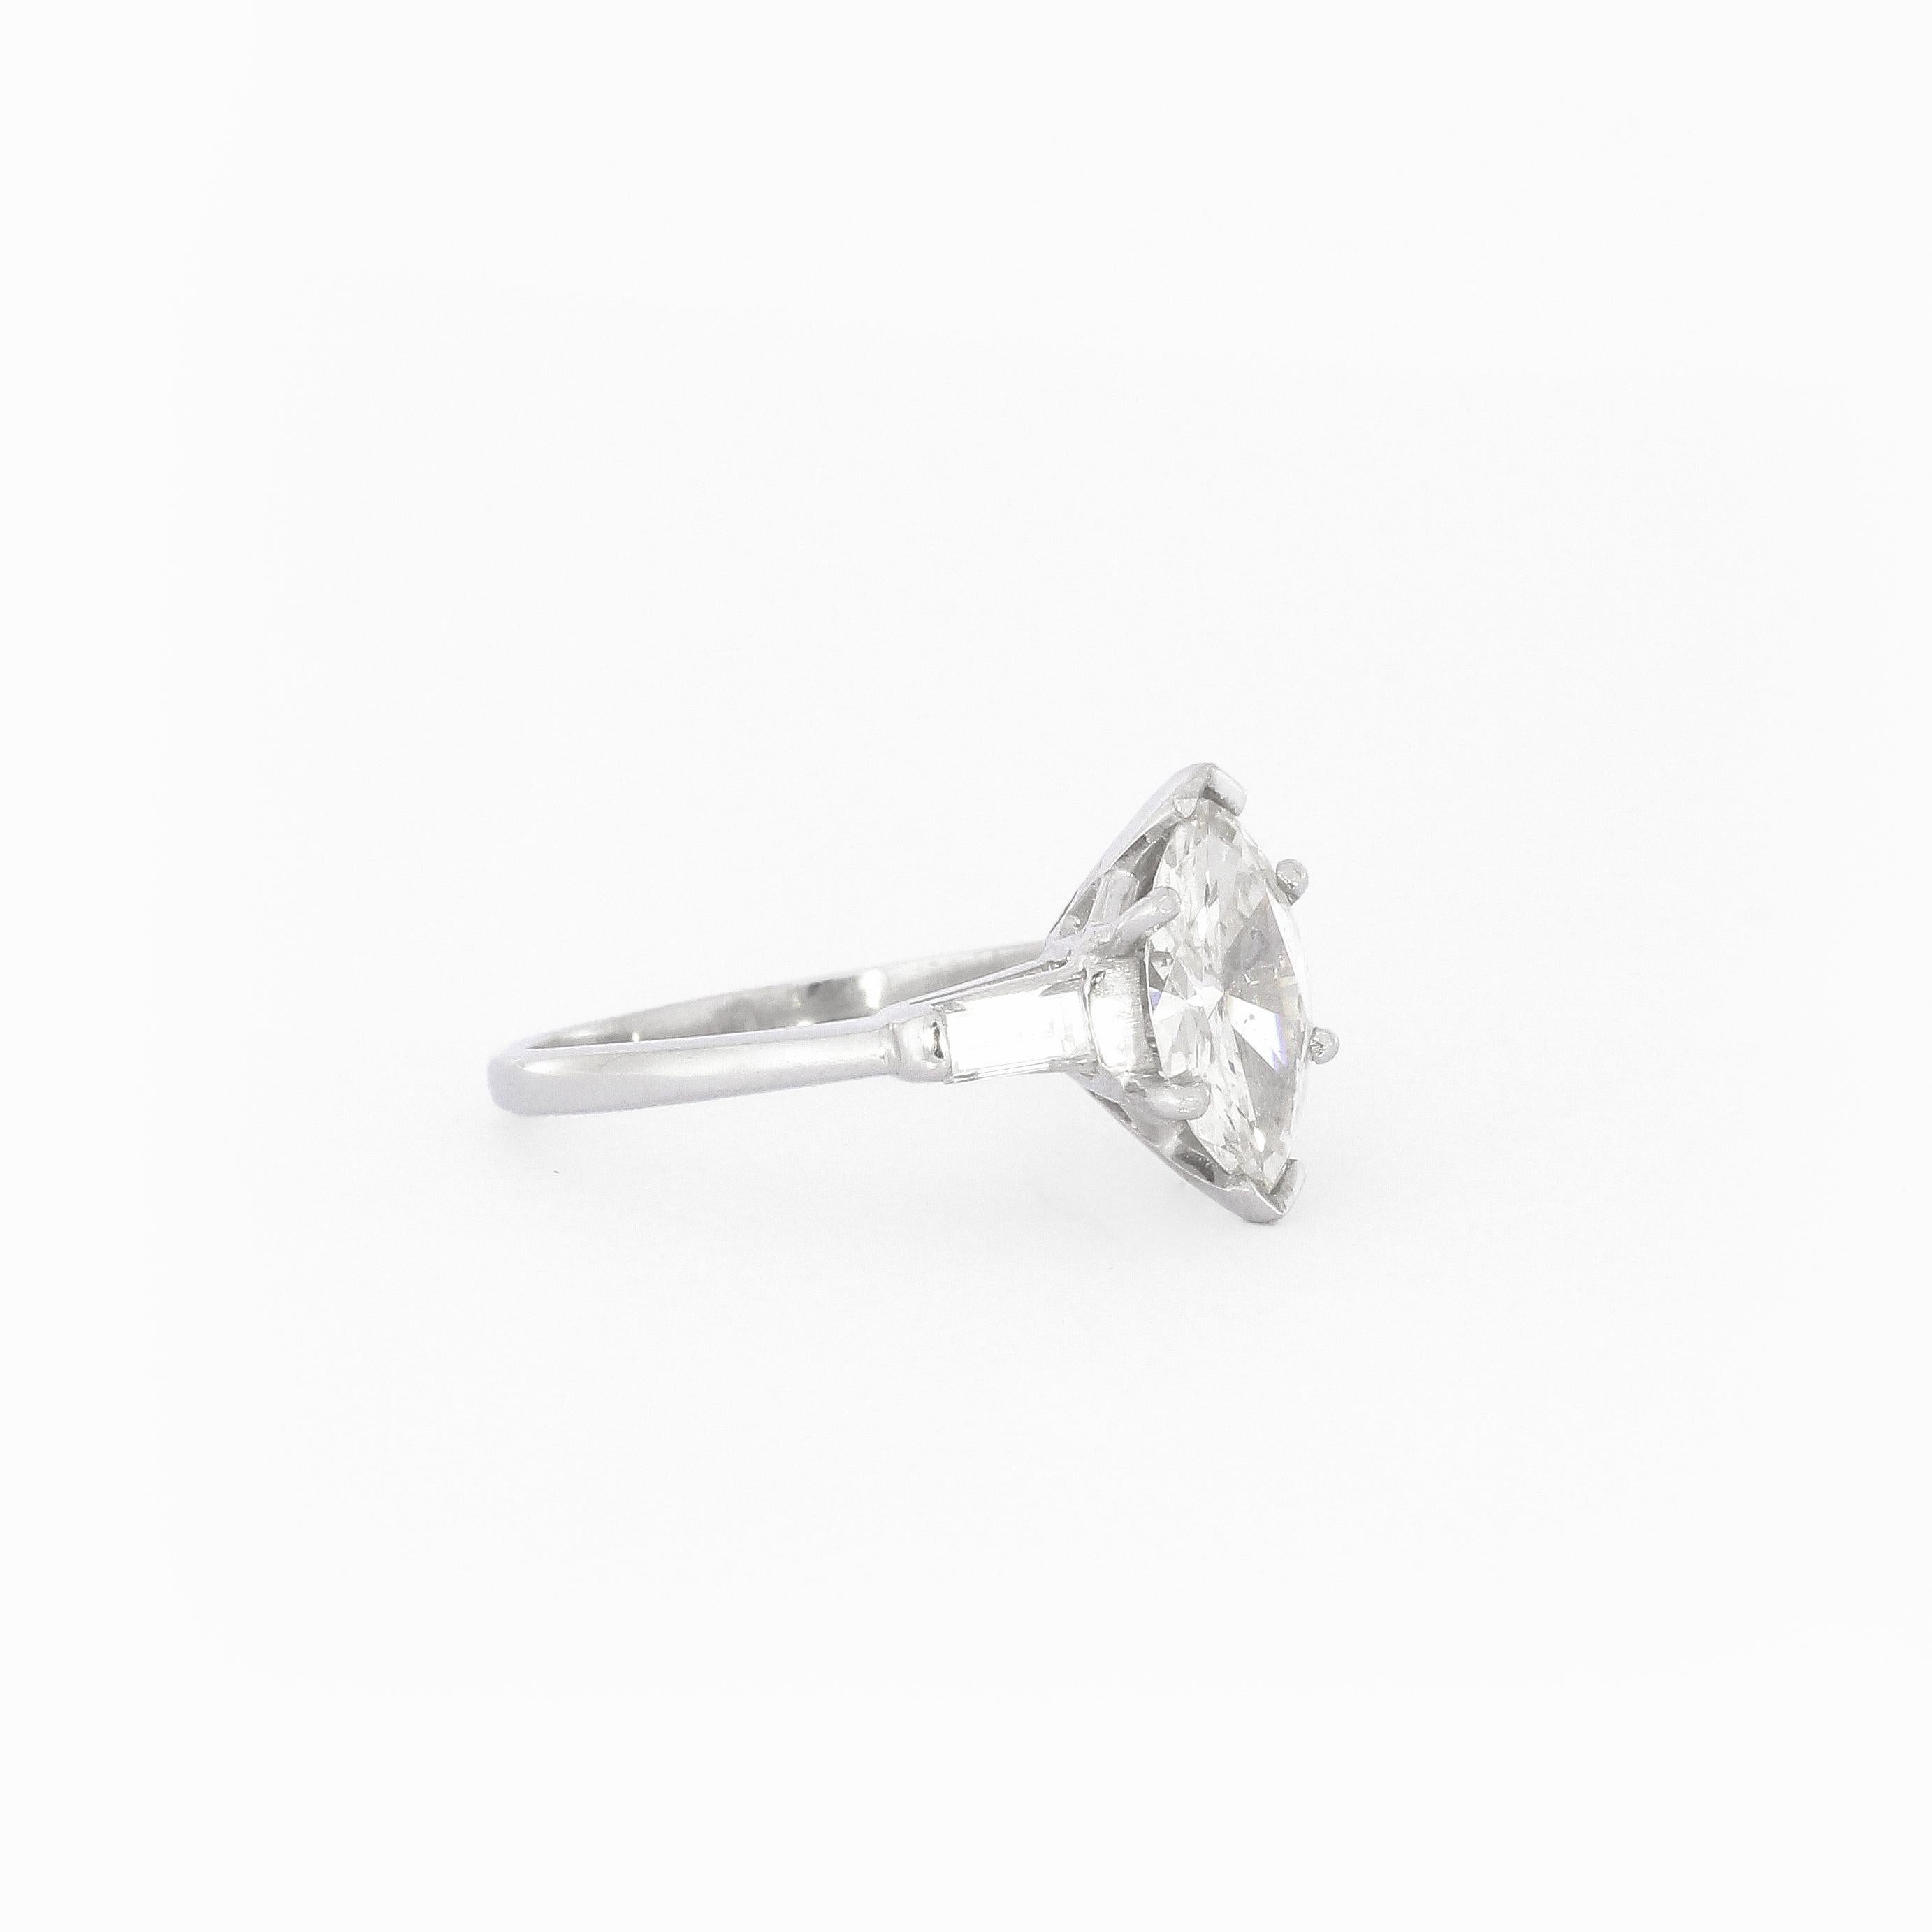 Marquise Cut 1.01 Carat Diamond Solitaire Ring in Platinum For Sale 3